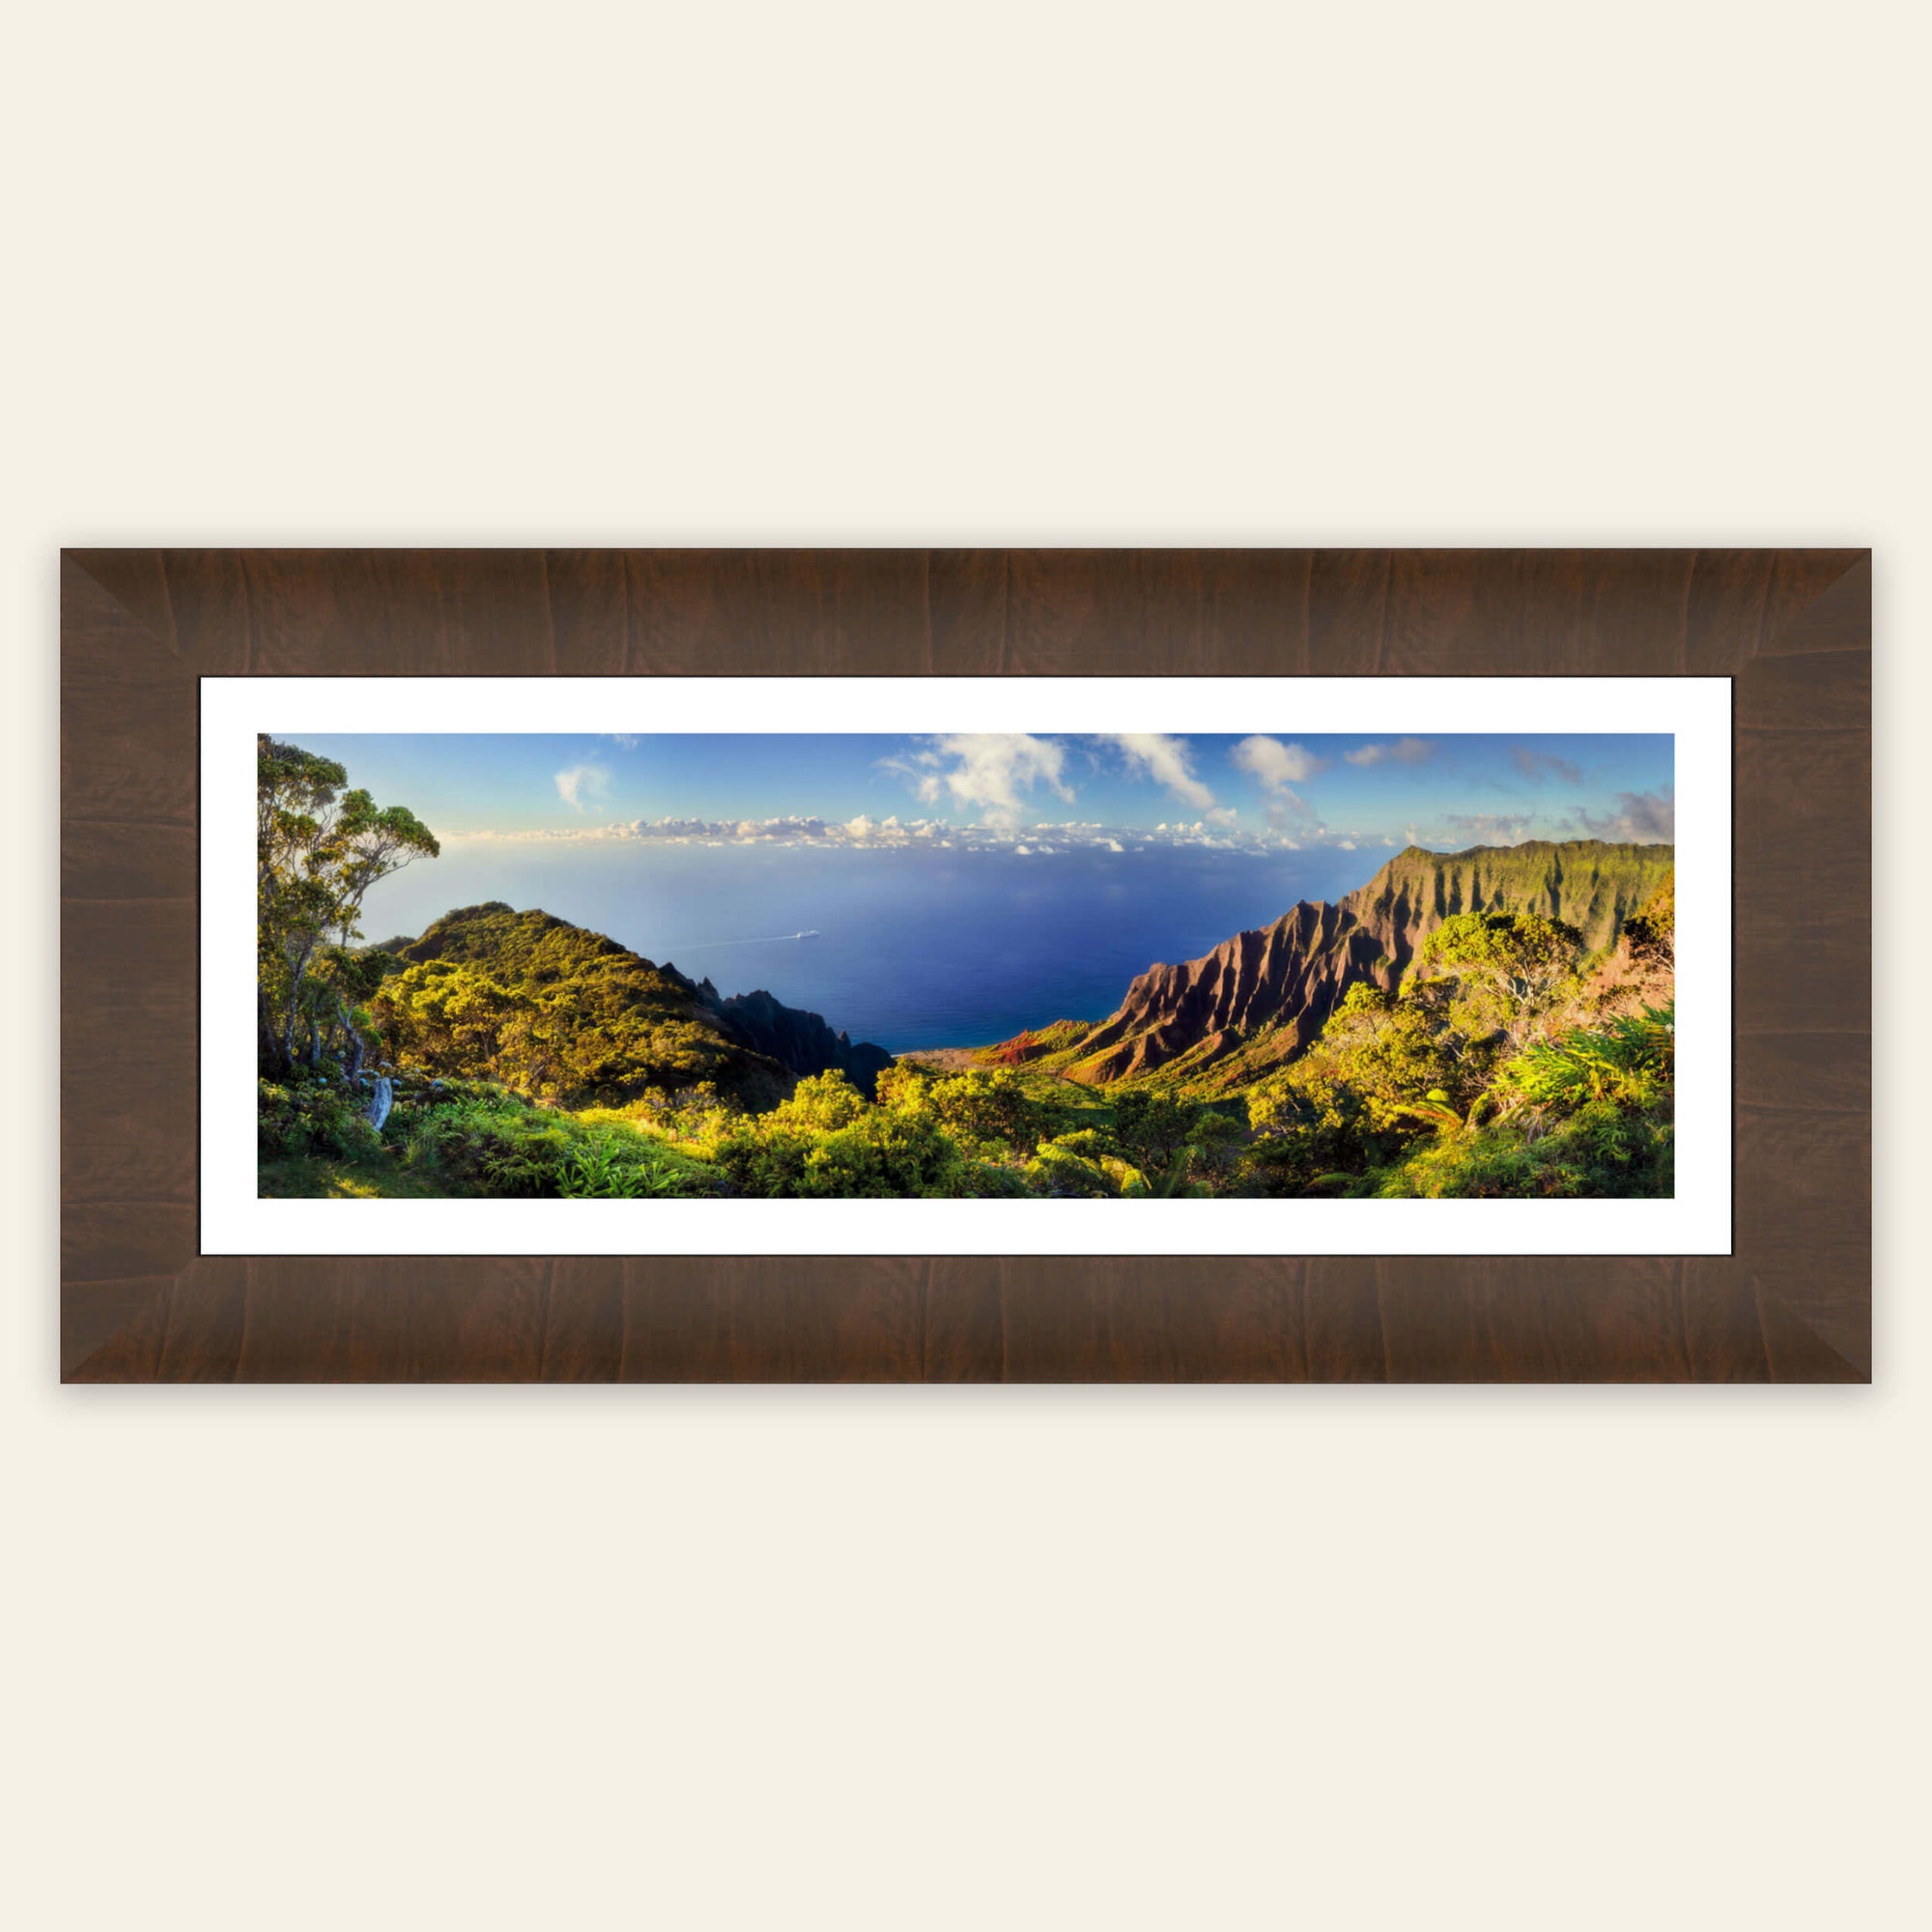 A framed Napali Coast picture shows the Kalalau Valley on Kauai.